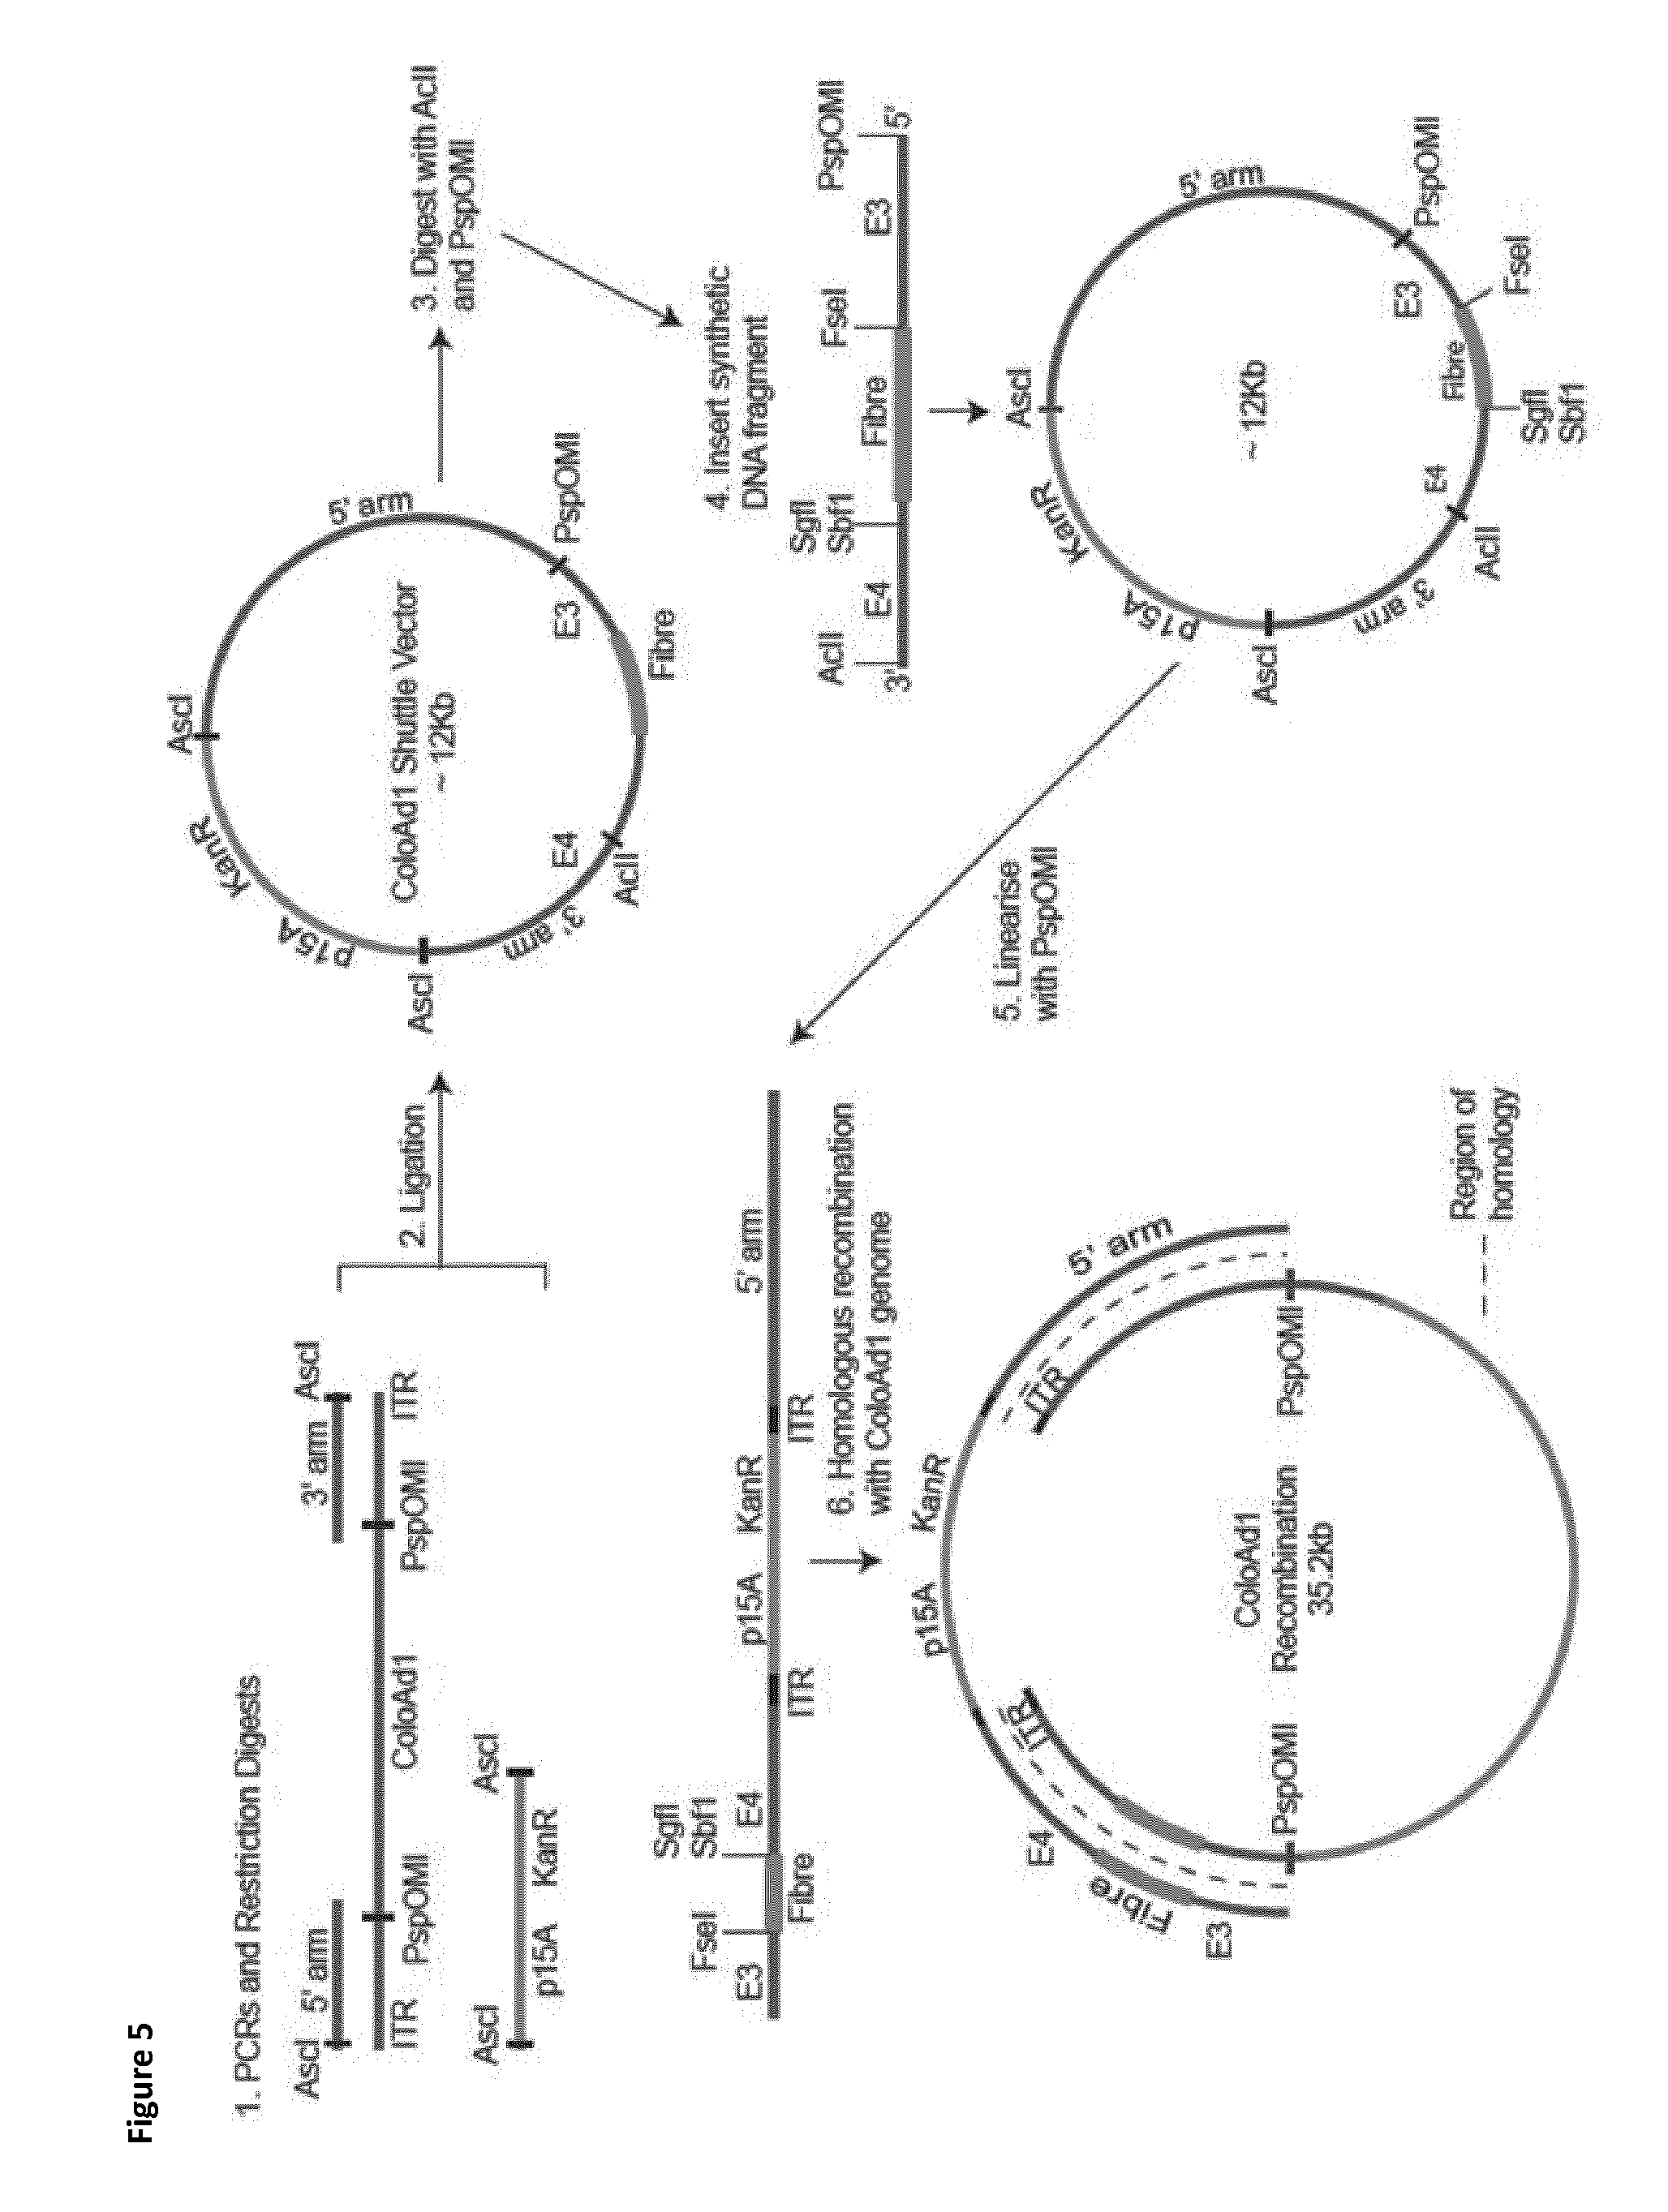 A method of making adenovirus and corresponding plasmids